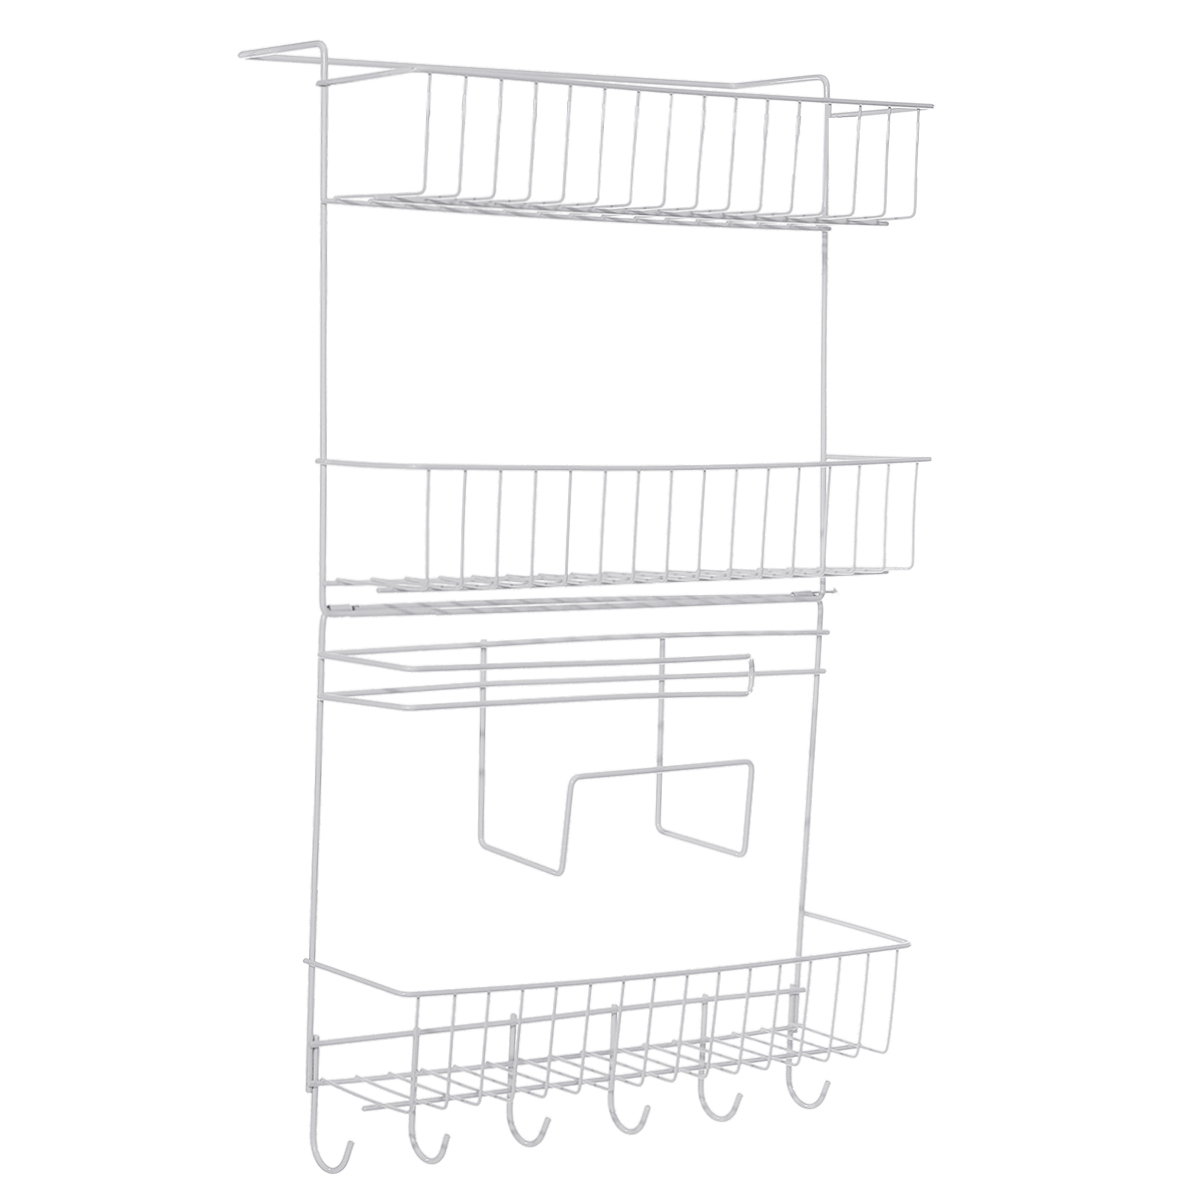 Wall-Shelf-Hanging-Storage-Rack-Storage-Organizer-Shelf-Free-Carbon-Steel-Storage-Shelves-Rack-for-K-1734029-7